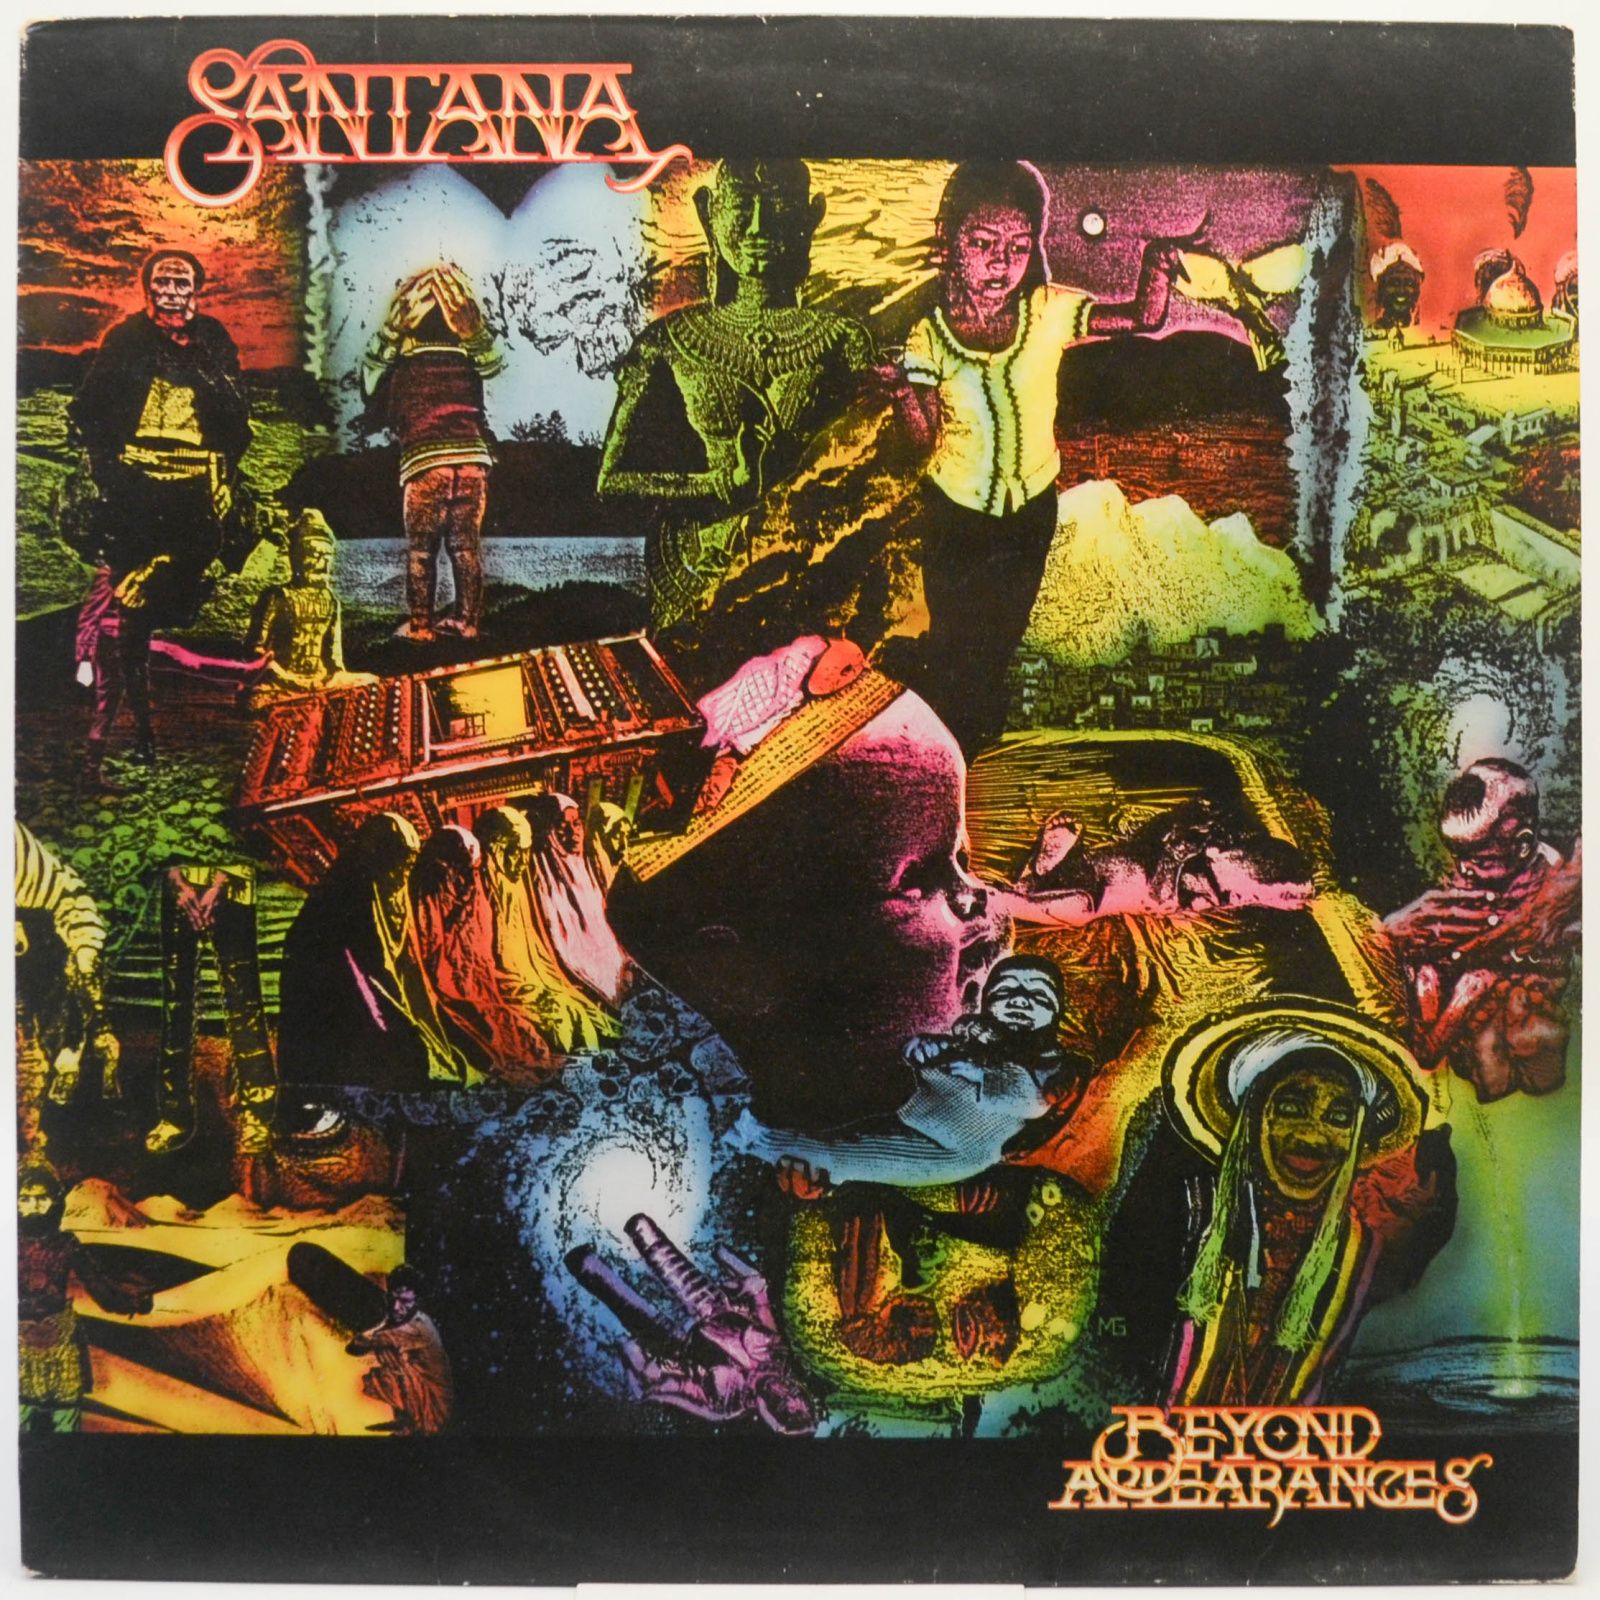 Santana — Beyond Appearances, 1985